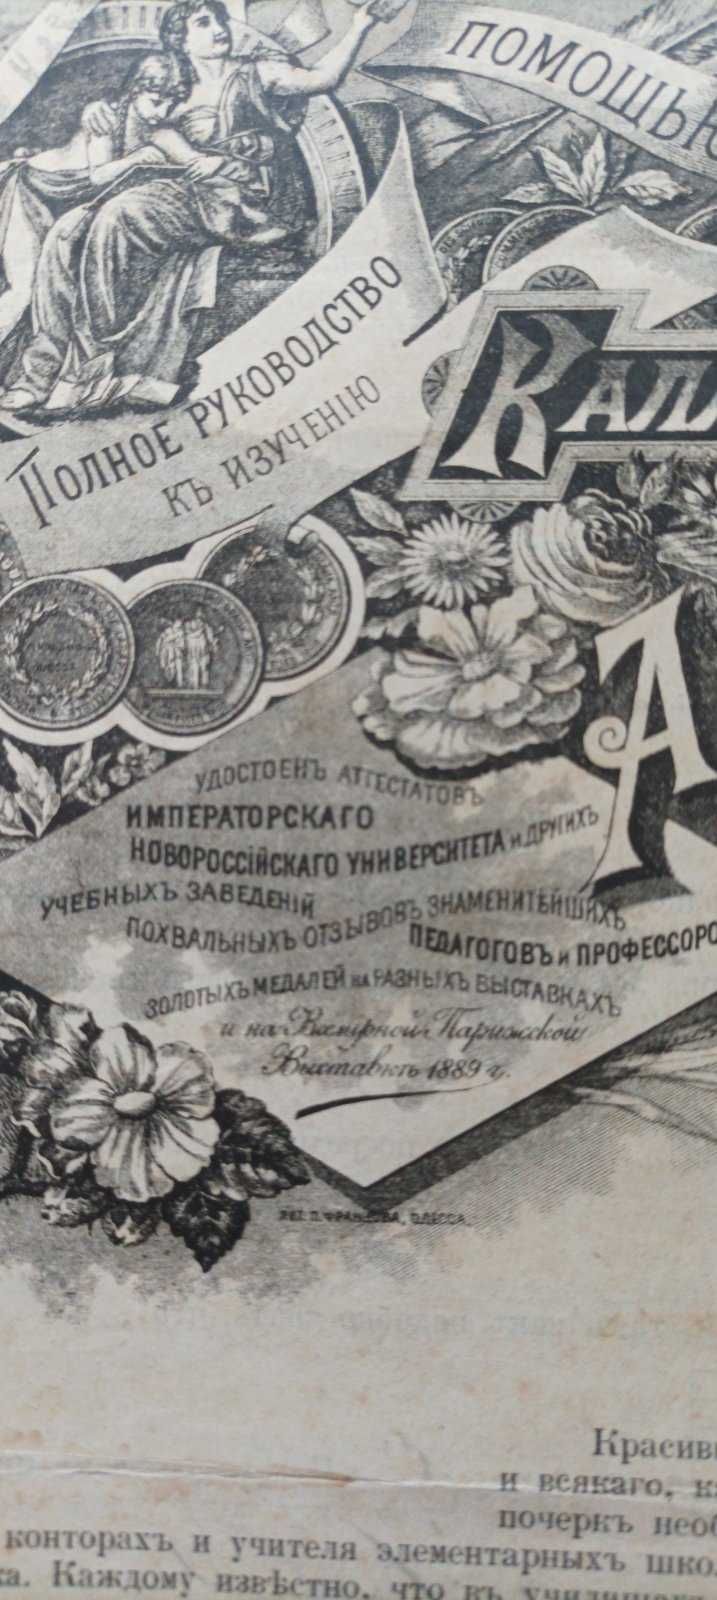 Уроки каллиграфии, издано в Одессе 1893 год. Антиквариат.